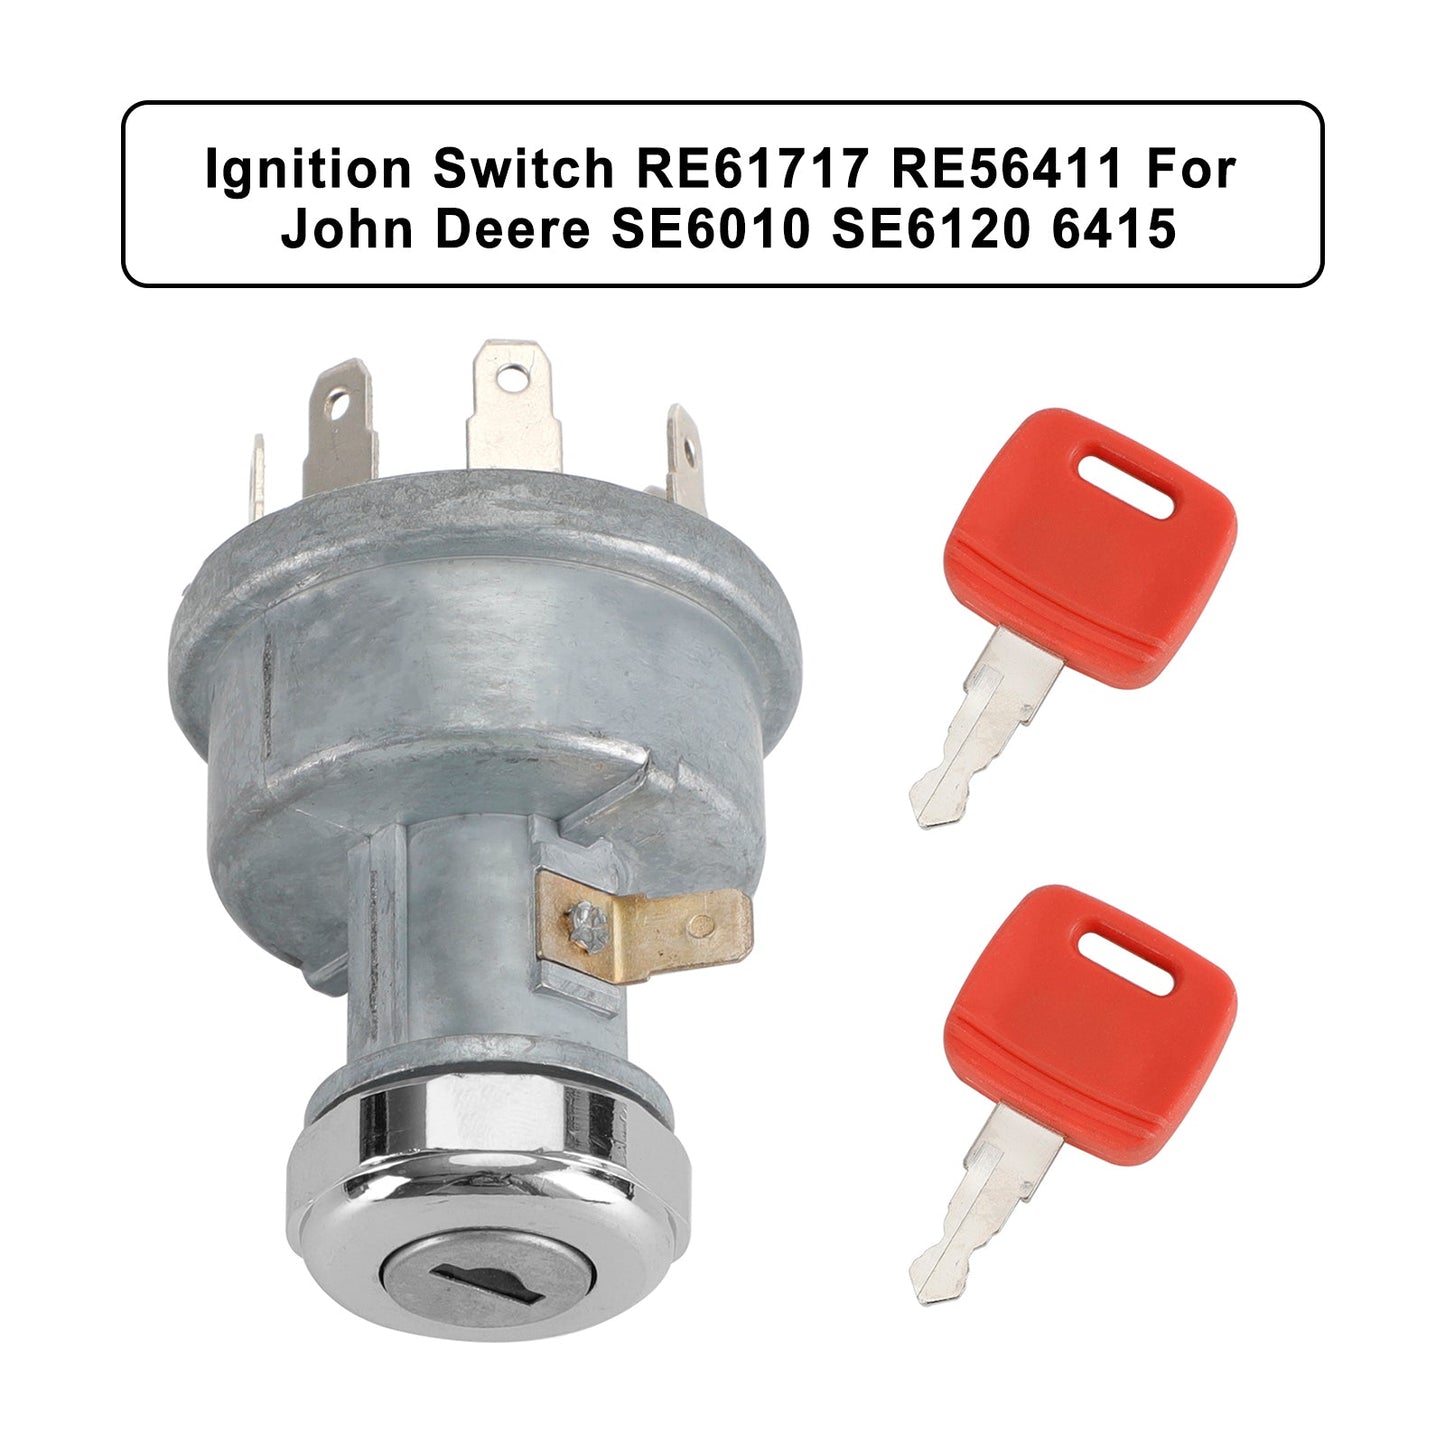 Ignition Switch RE61717 RE56411 For John Deere SE6010 SE6120 6415